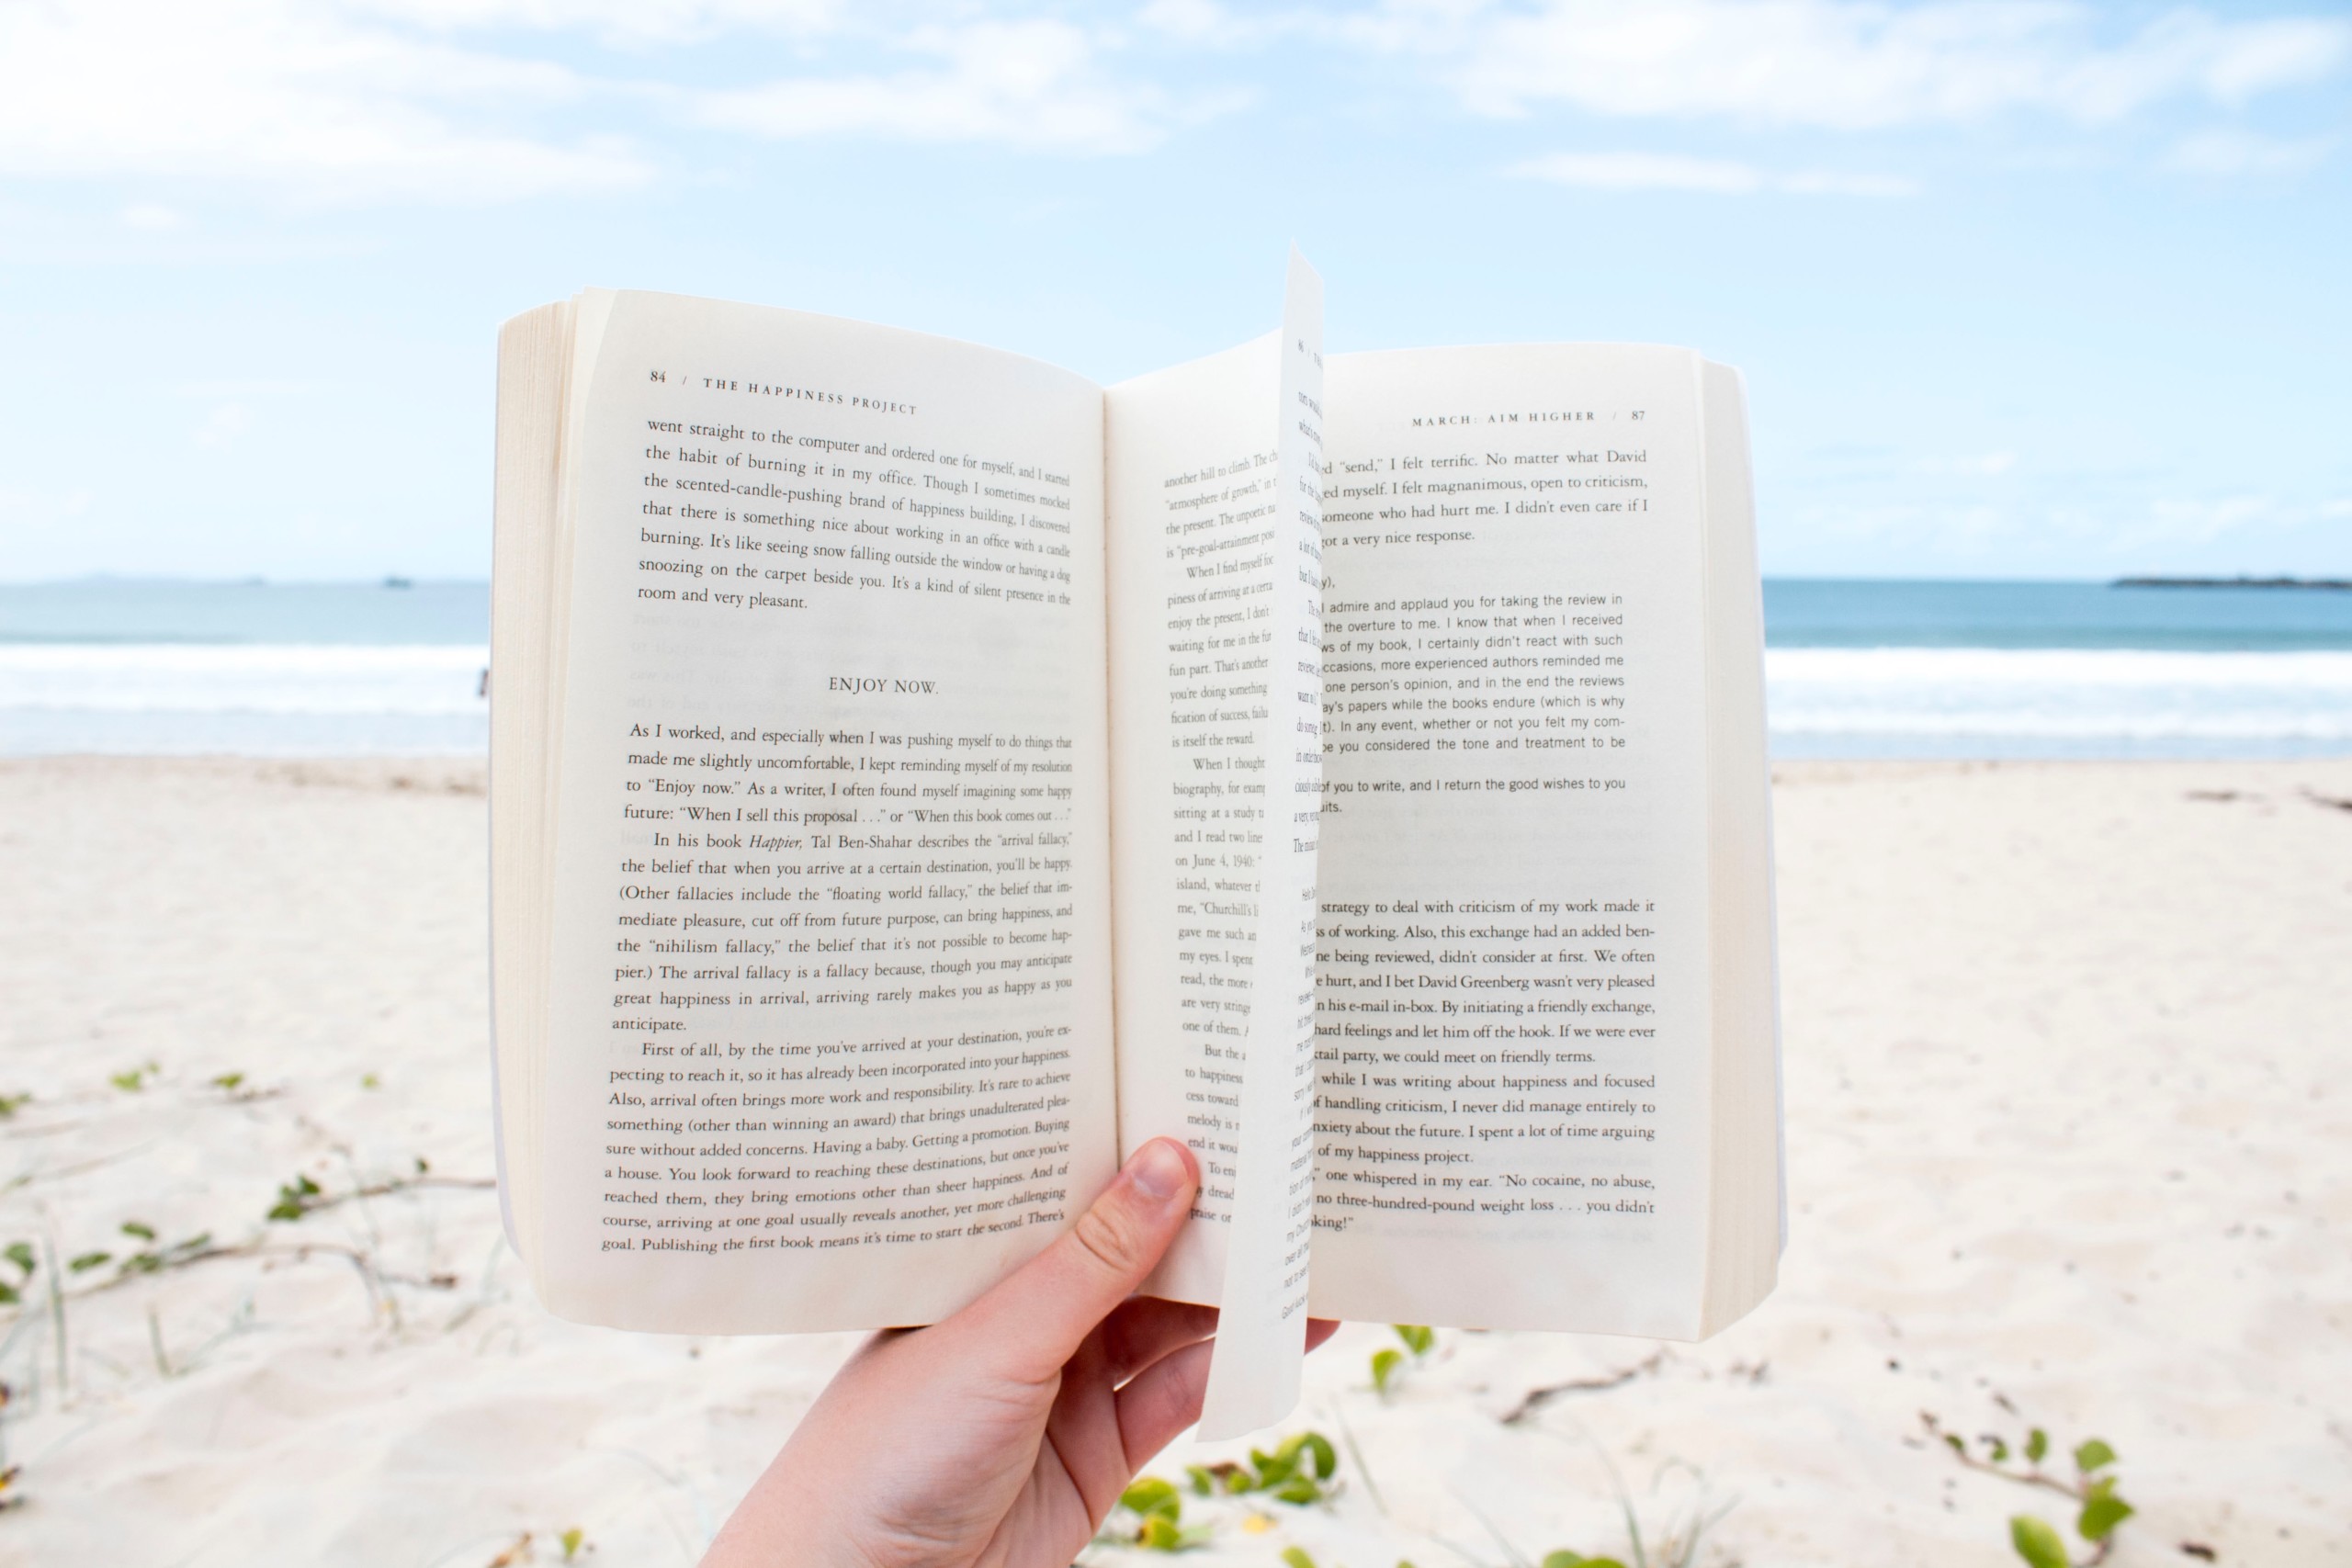 L’inglese per l’estate: reading